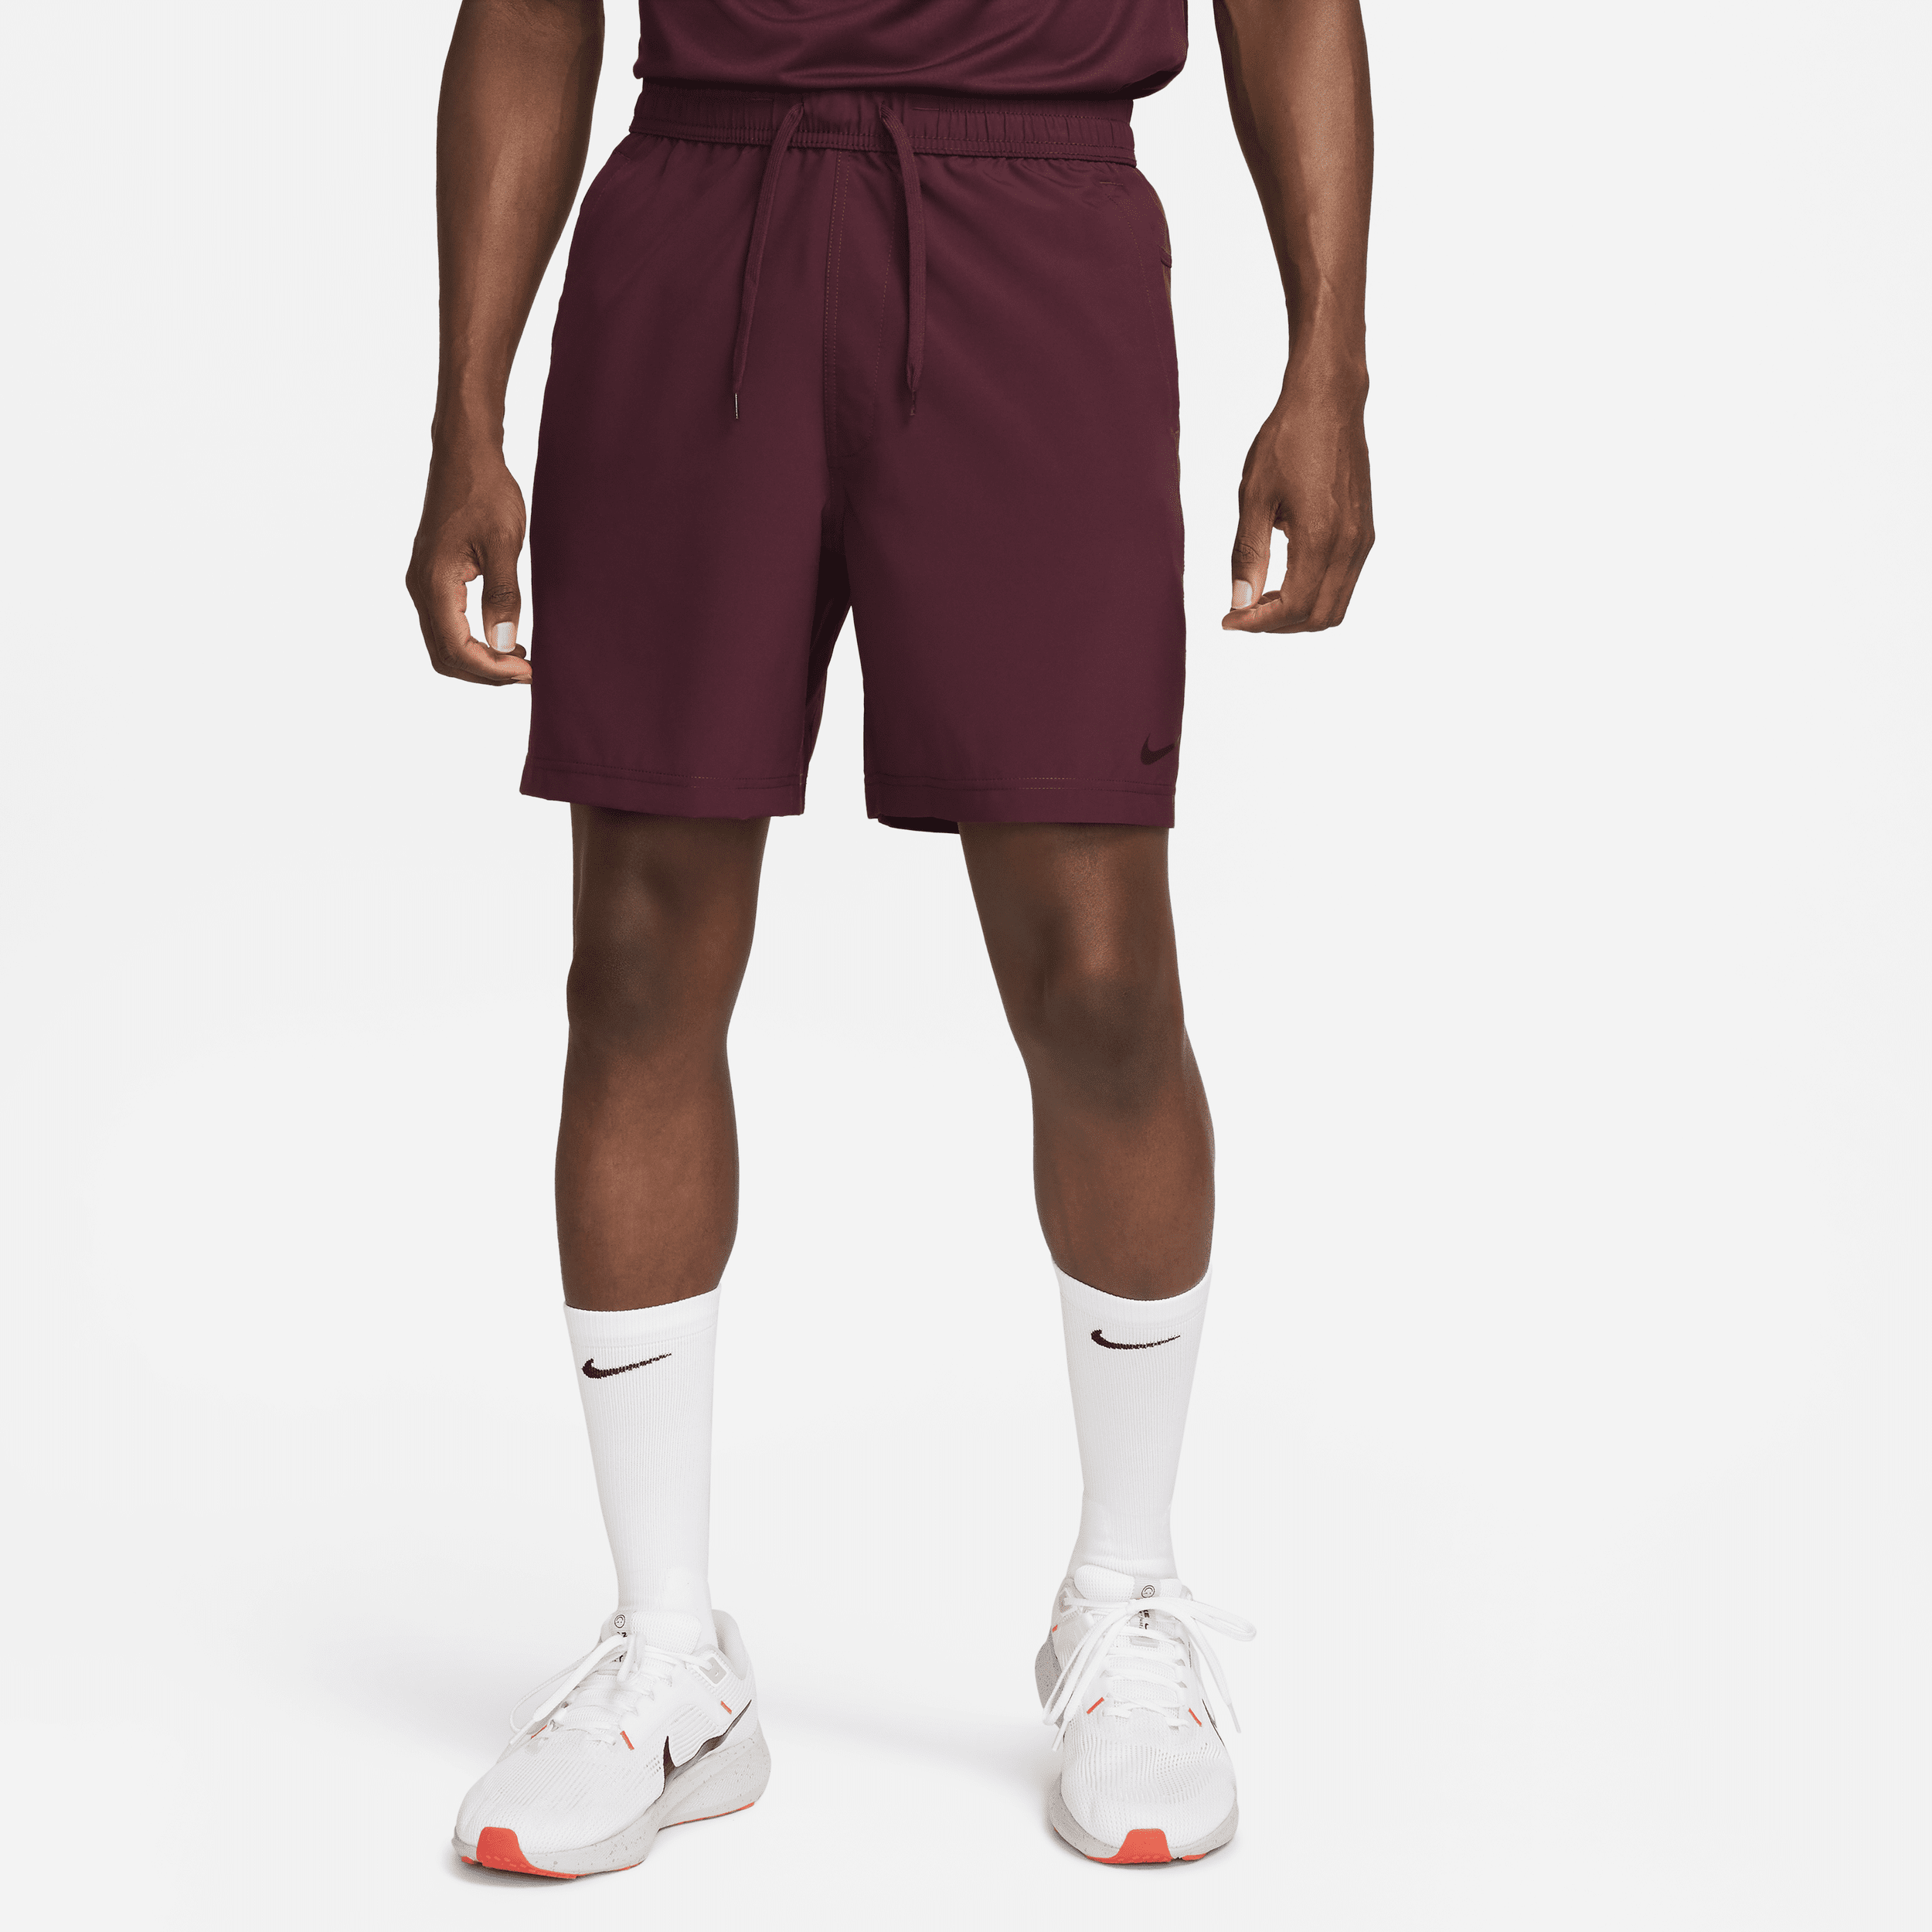 Nike Form Dri-FIT multifunctionele herenshorts zonder binnenbroek (18 cm) Rood